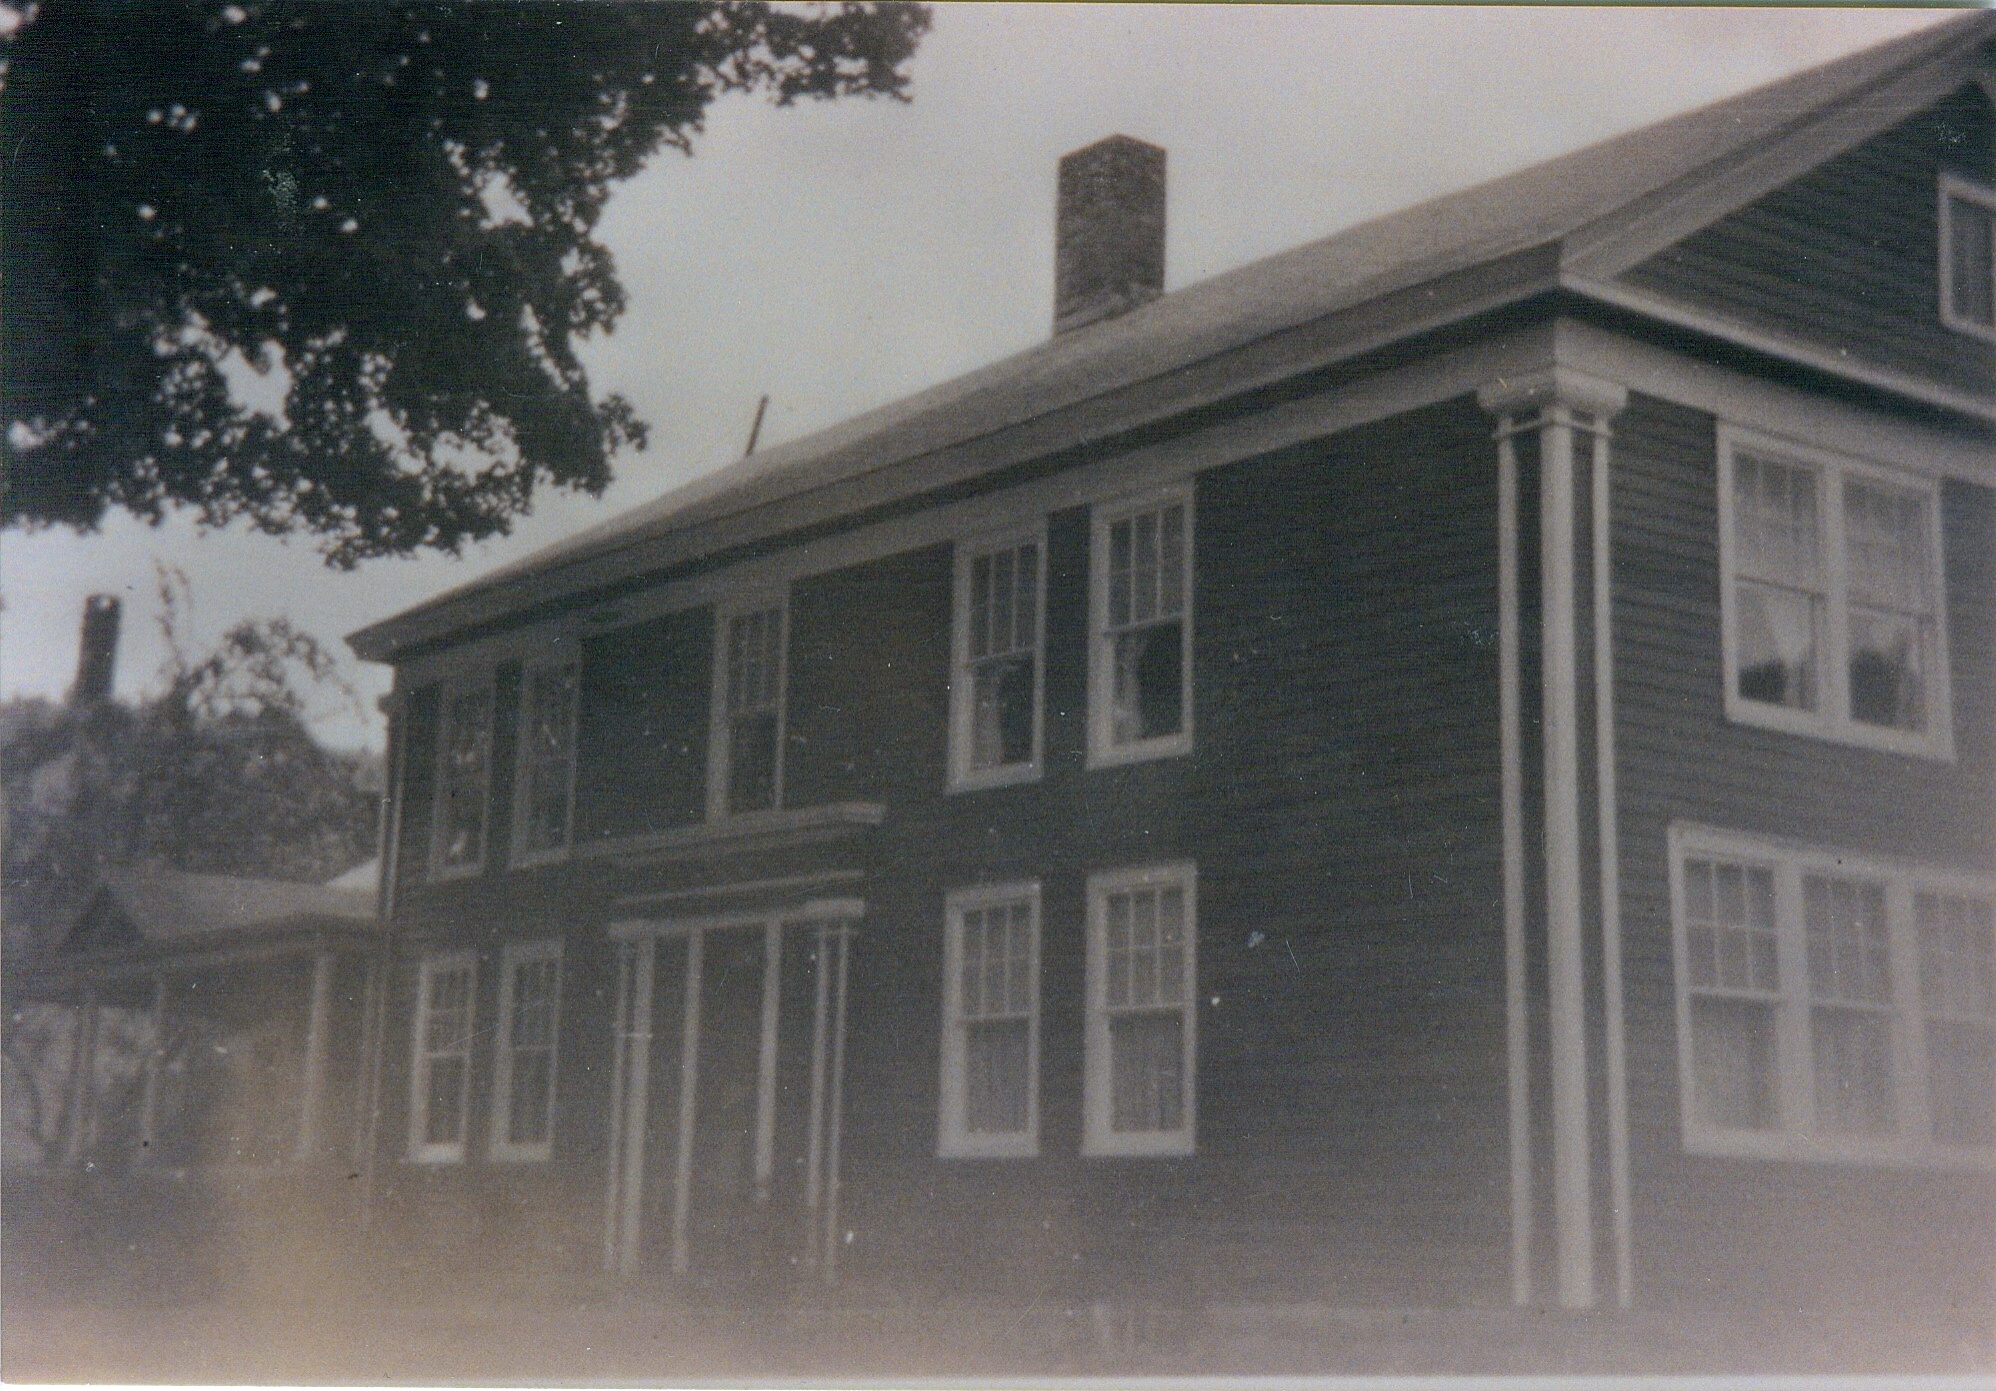 The Historic Engel House